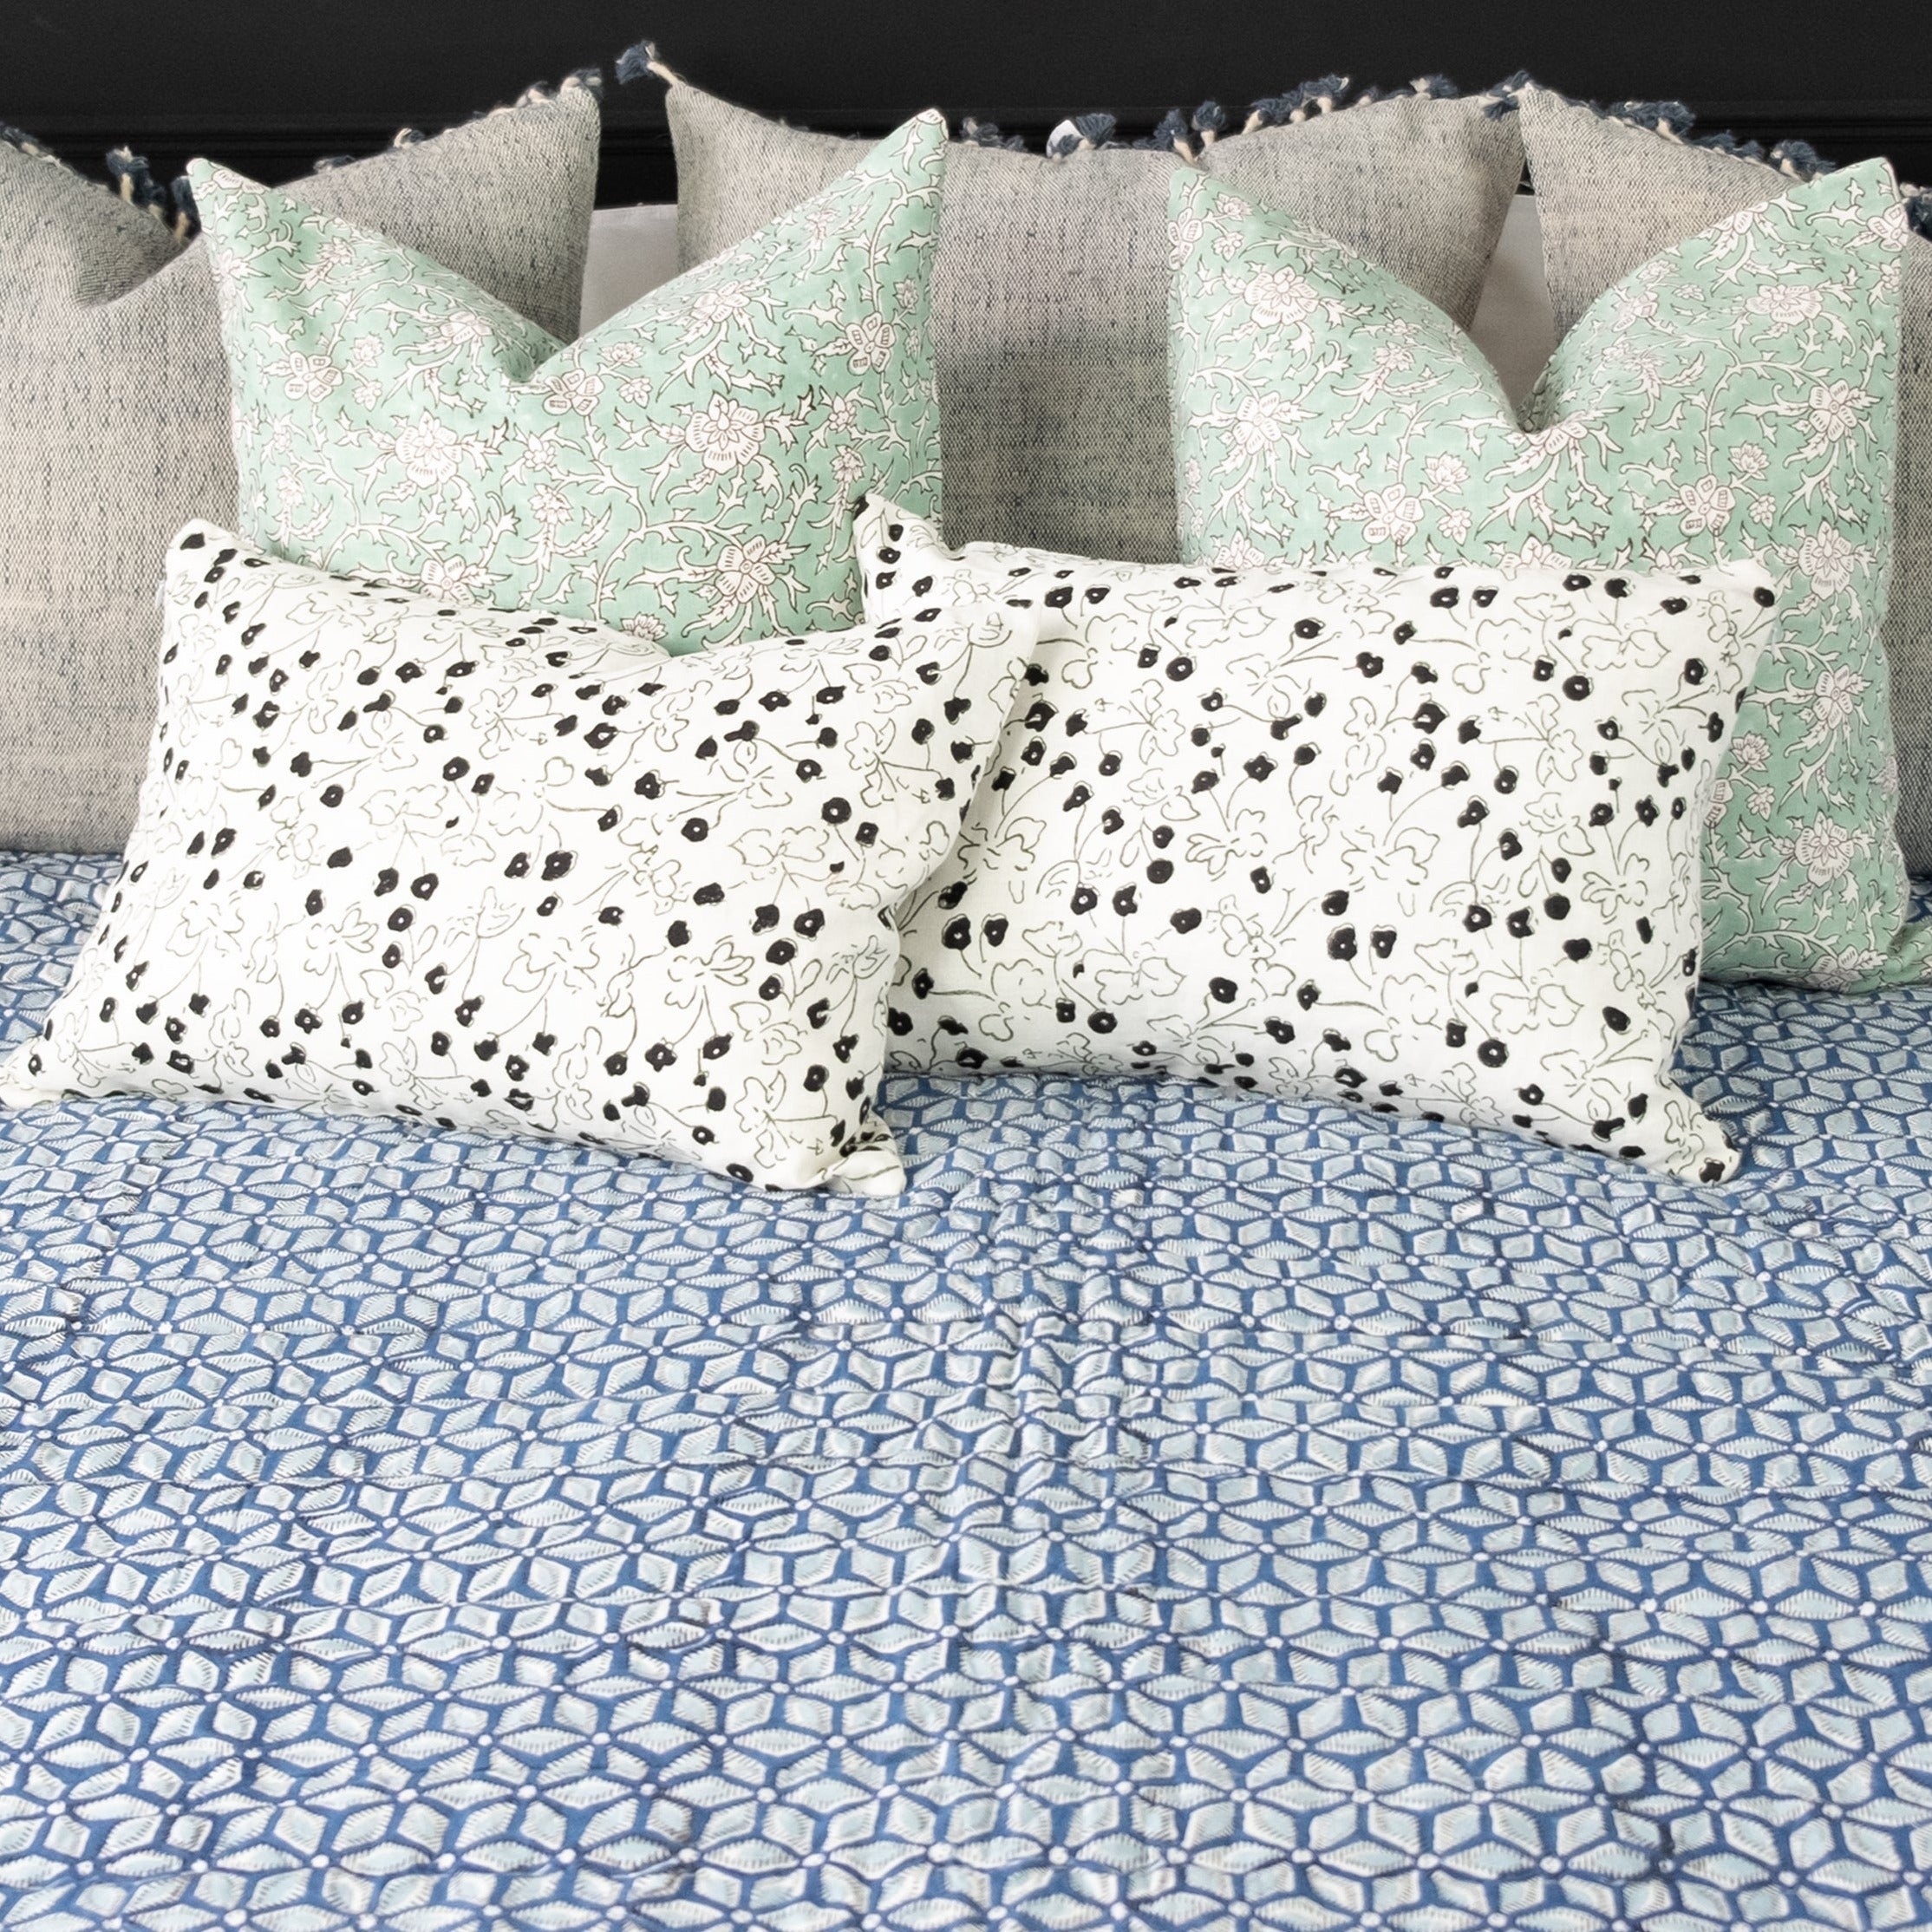 Brittany Celadon Linen Pillow